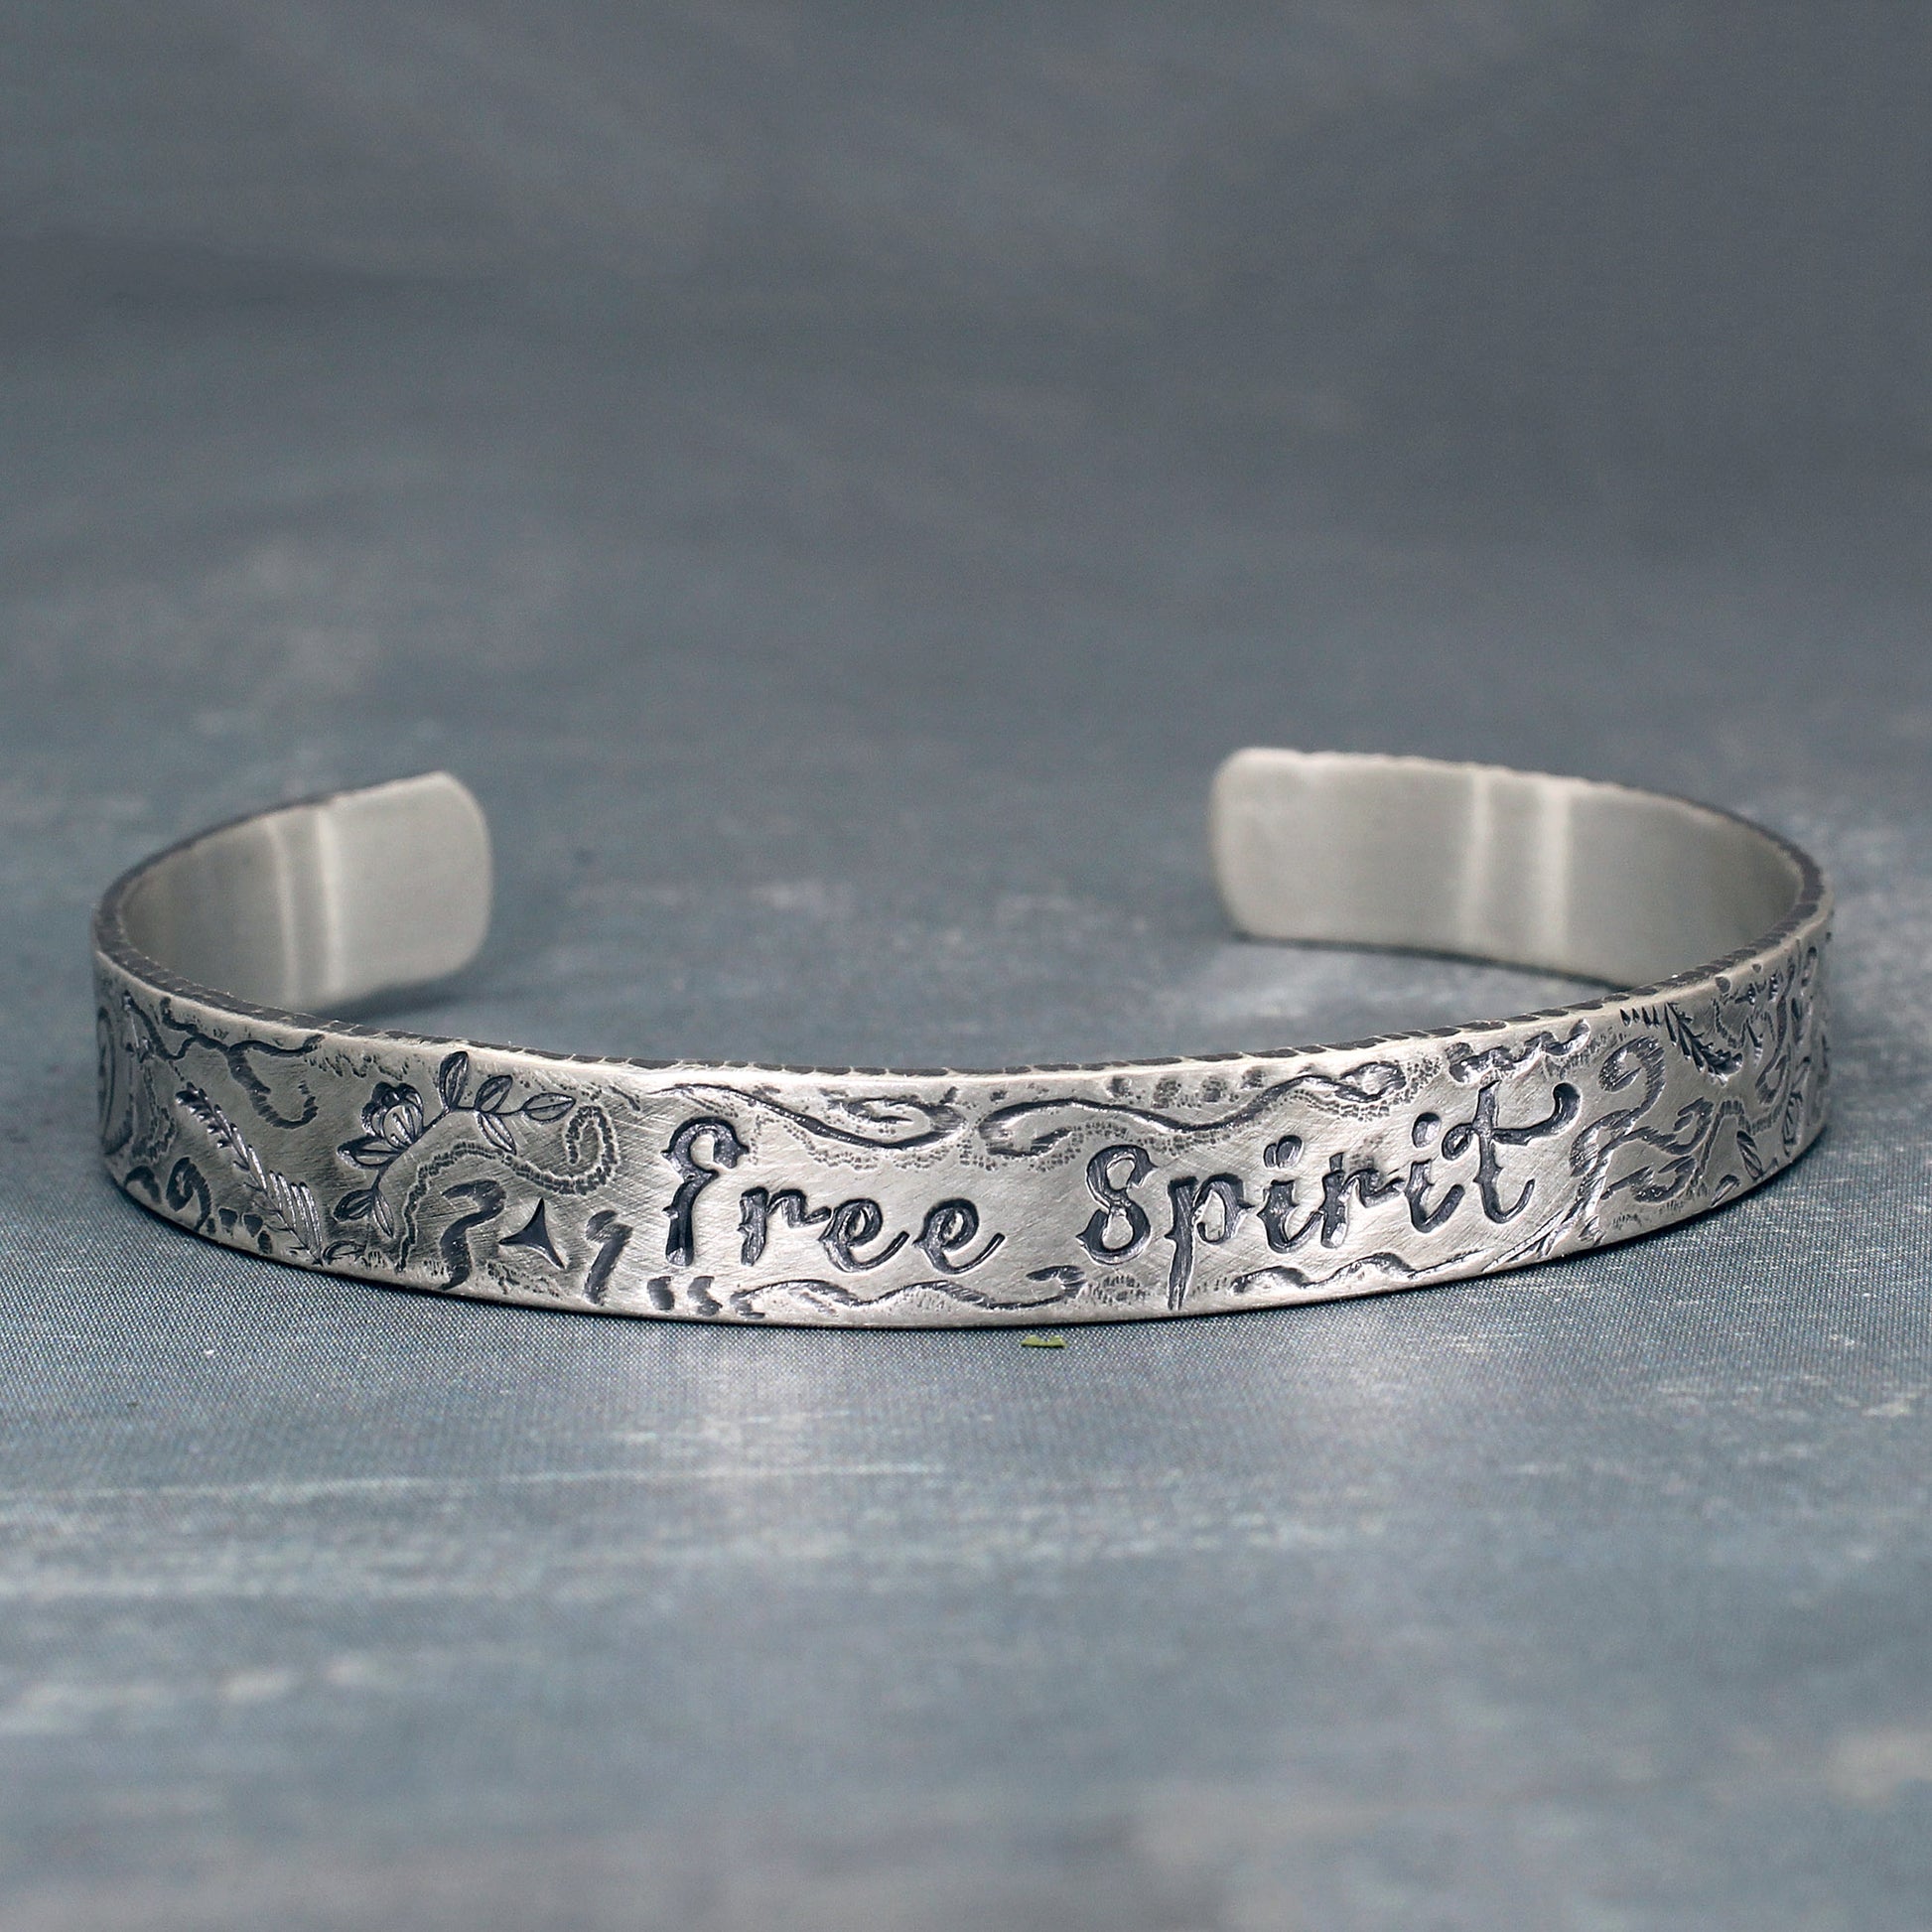 Free Spirit bracelet